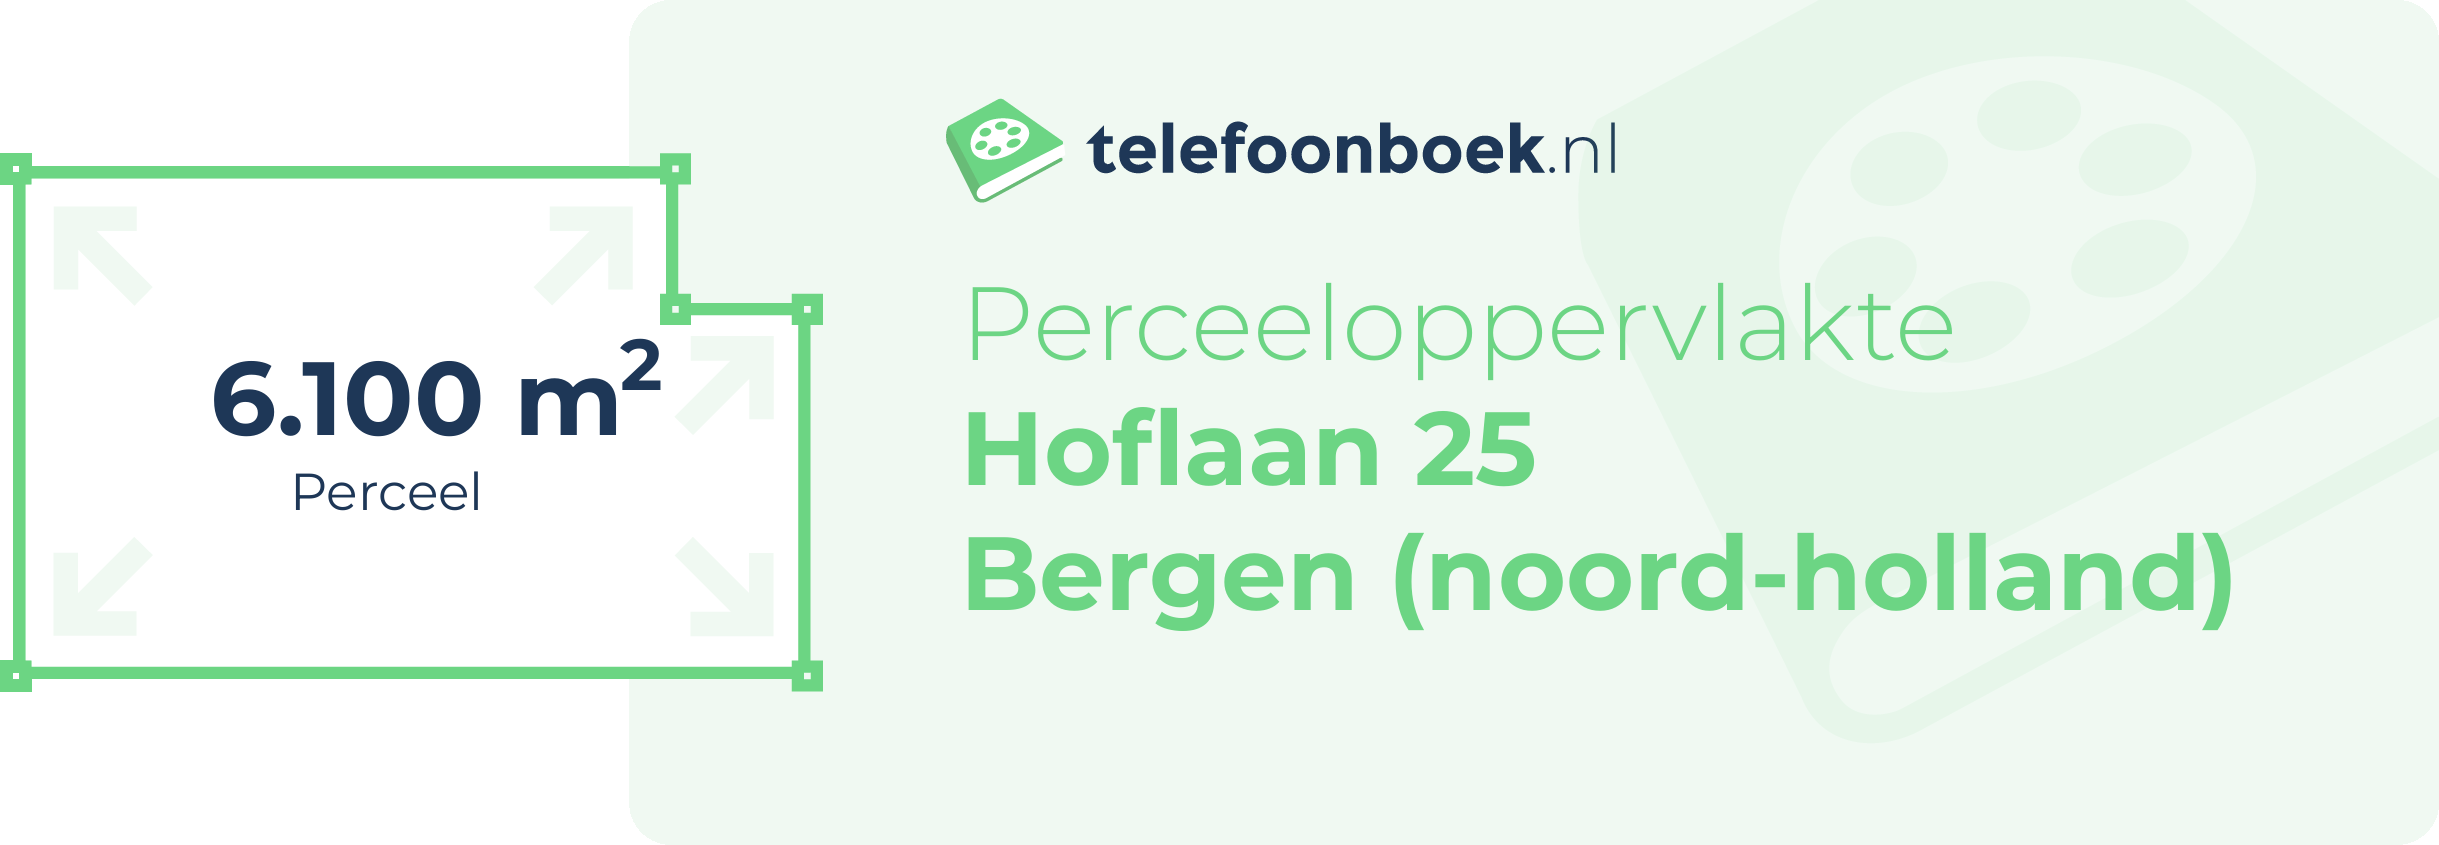 Perceeloppervlakte Hoflaan 25 Bergen (Noord-Holland)